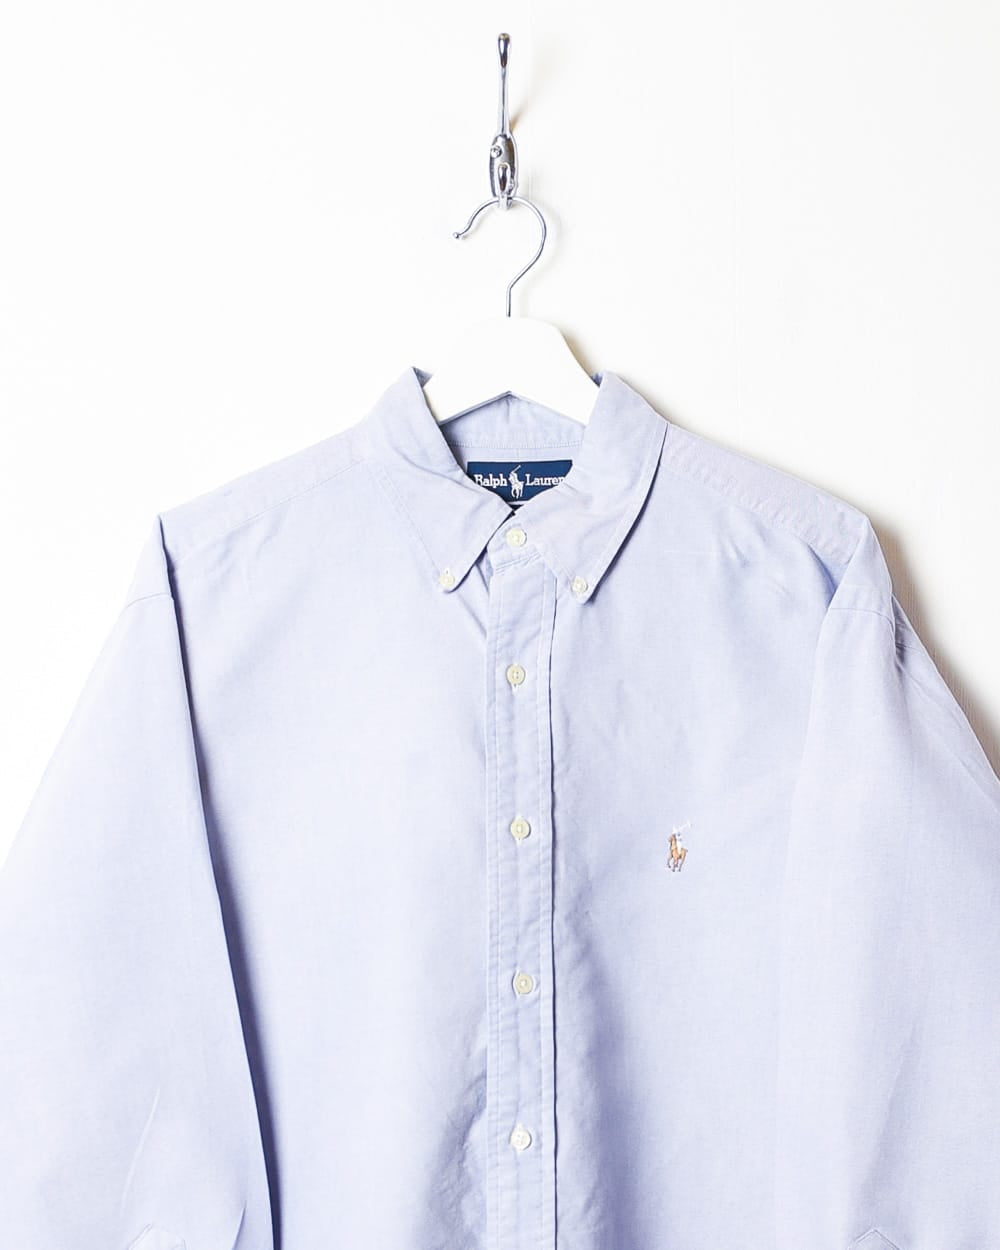 BabyBlue Polo Ralph Lauren Yarmouth Shirt - Large